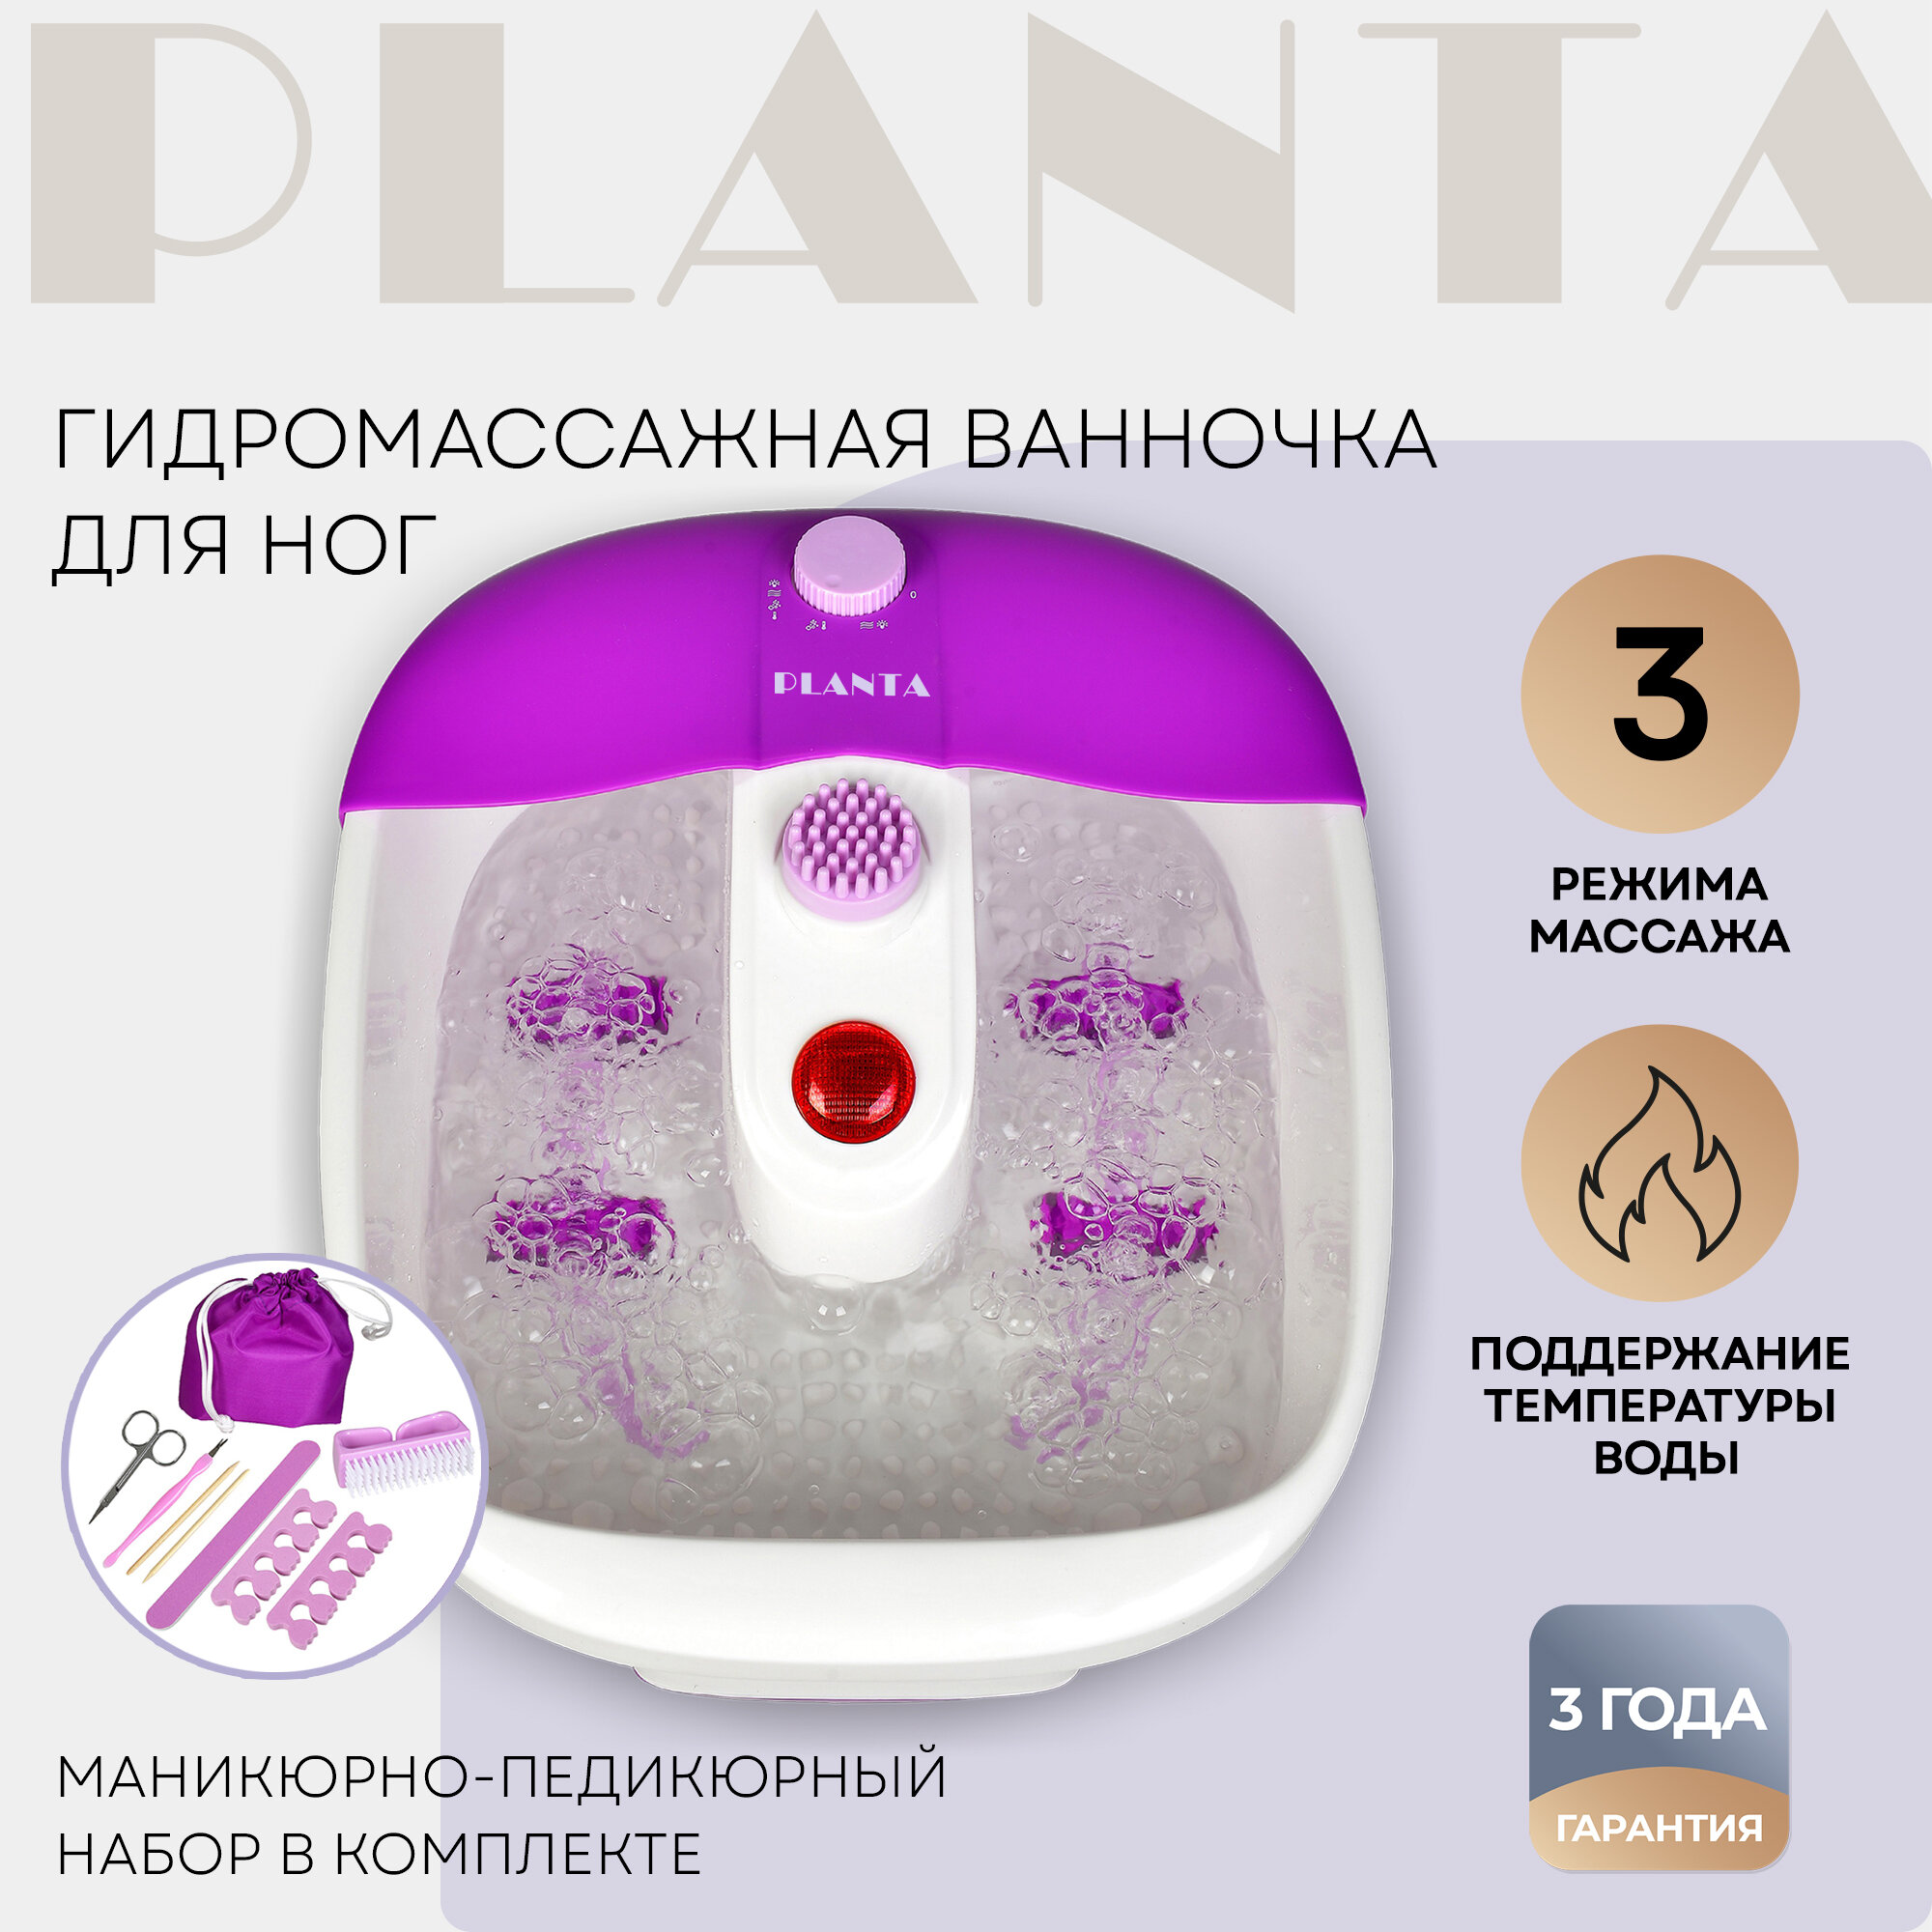 Гидромассажная ванночка для ног Planta - фото №1